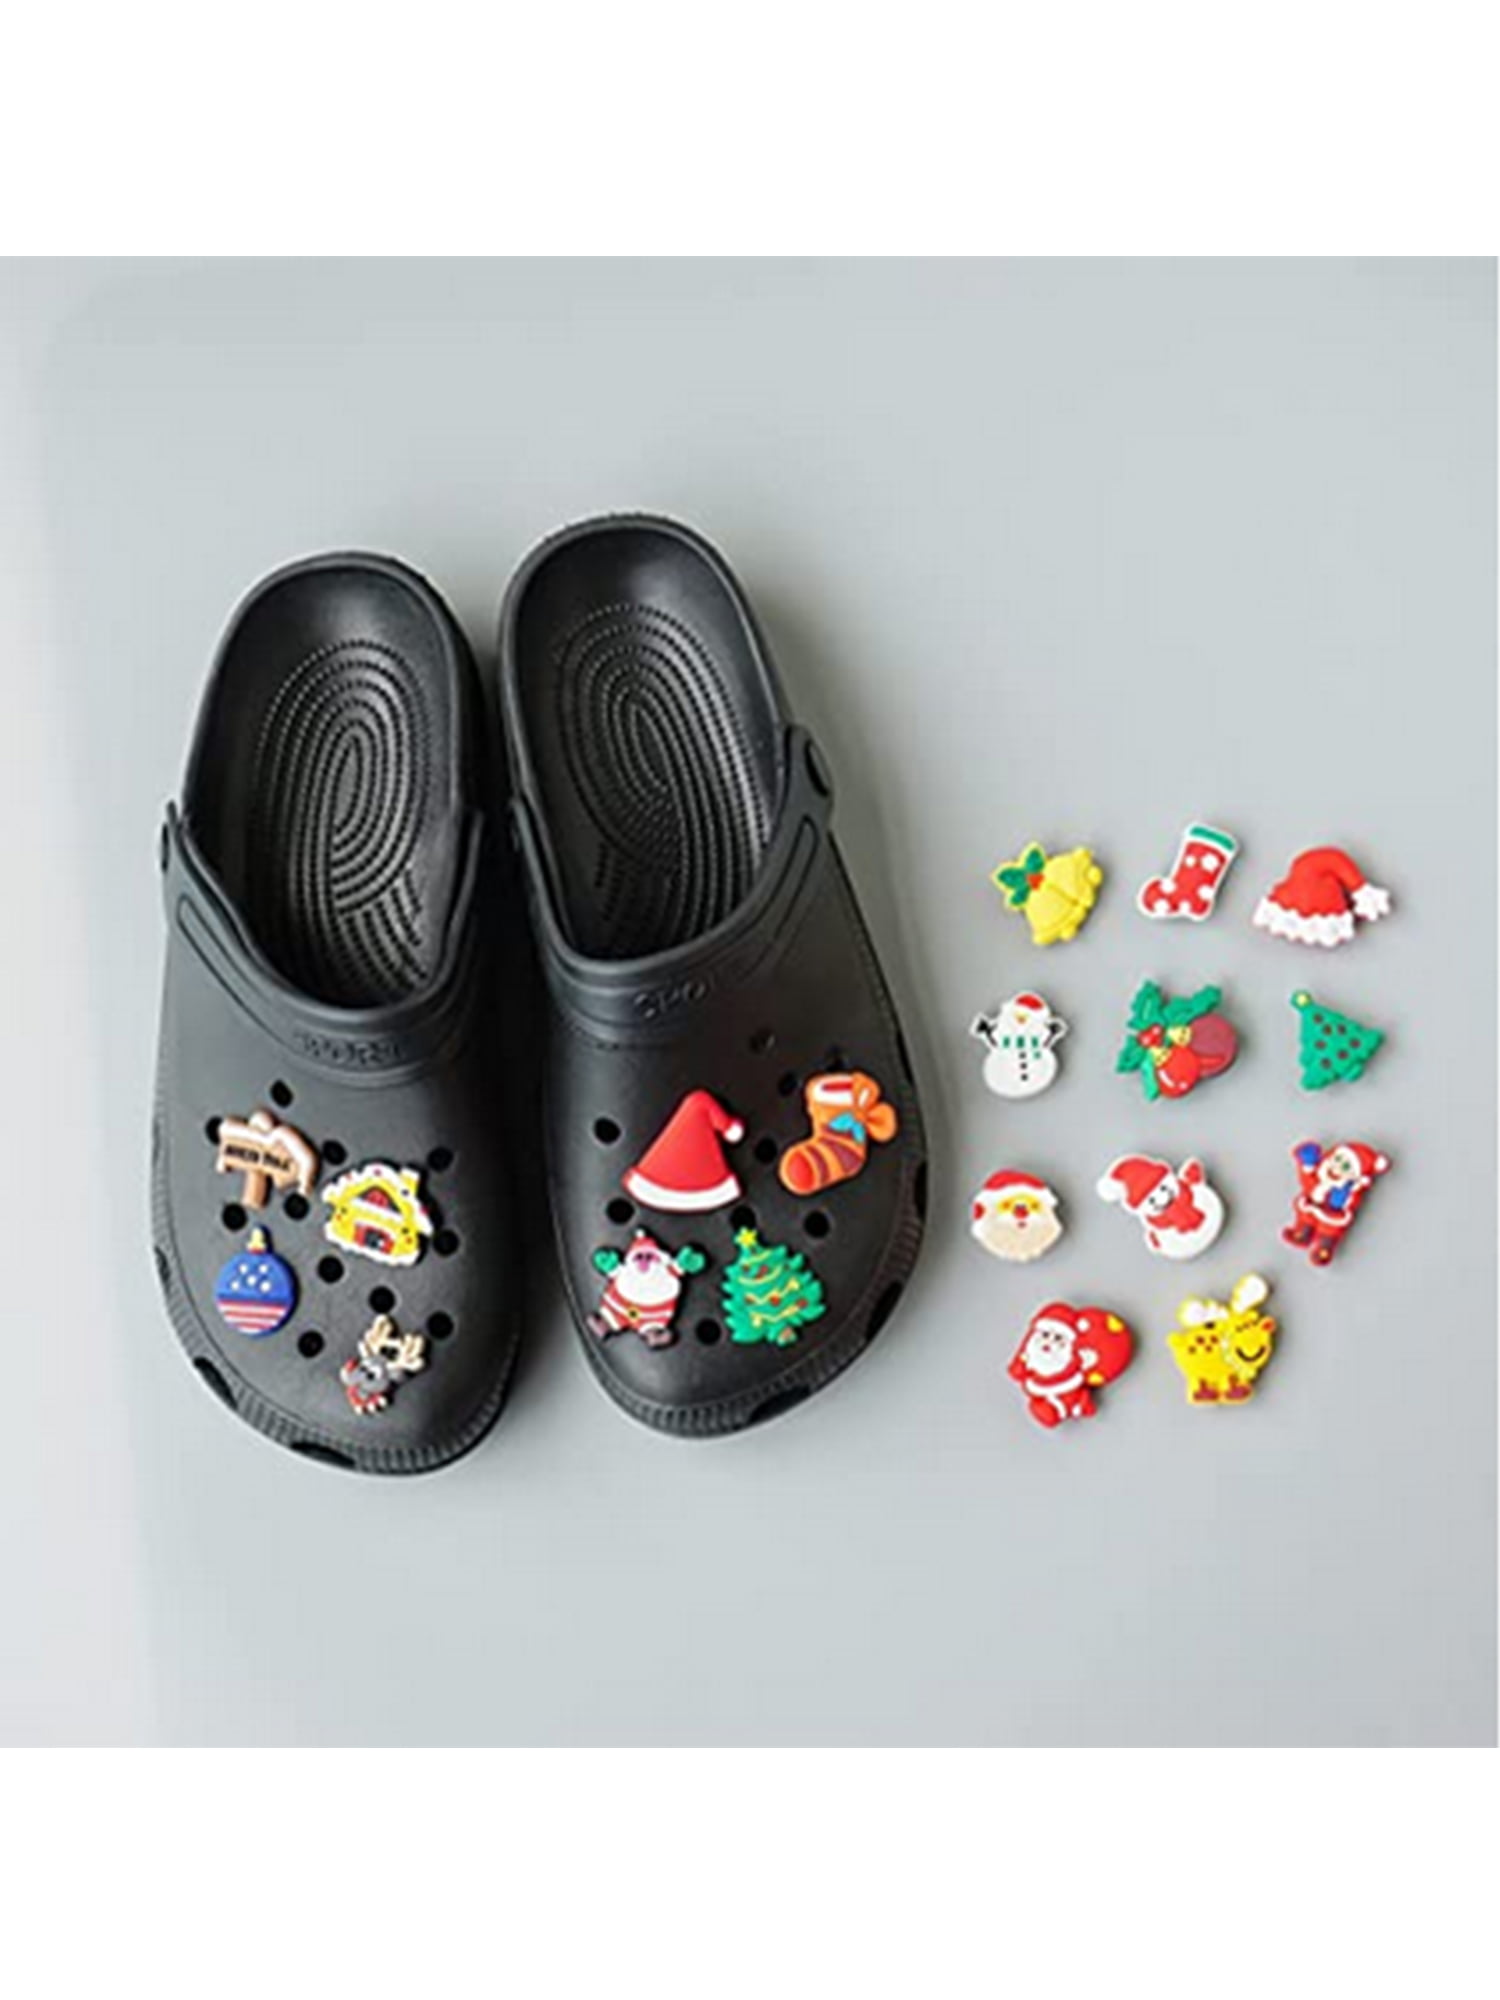 Cat Butt Hero's  Shoe Charms Shoe Buttons Plugs Accessories Shoe Decorations 